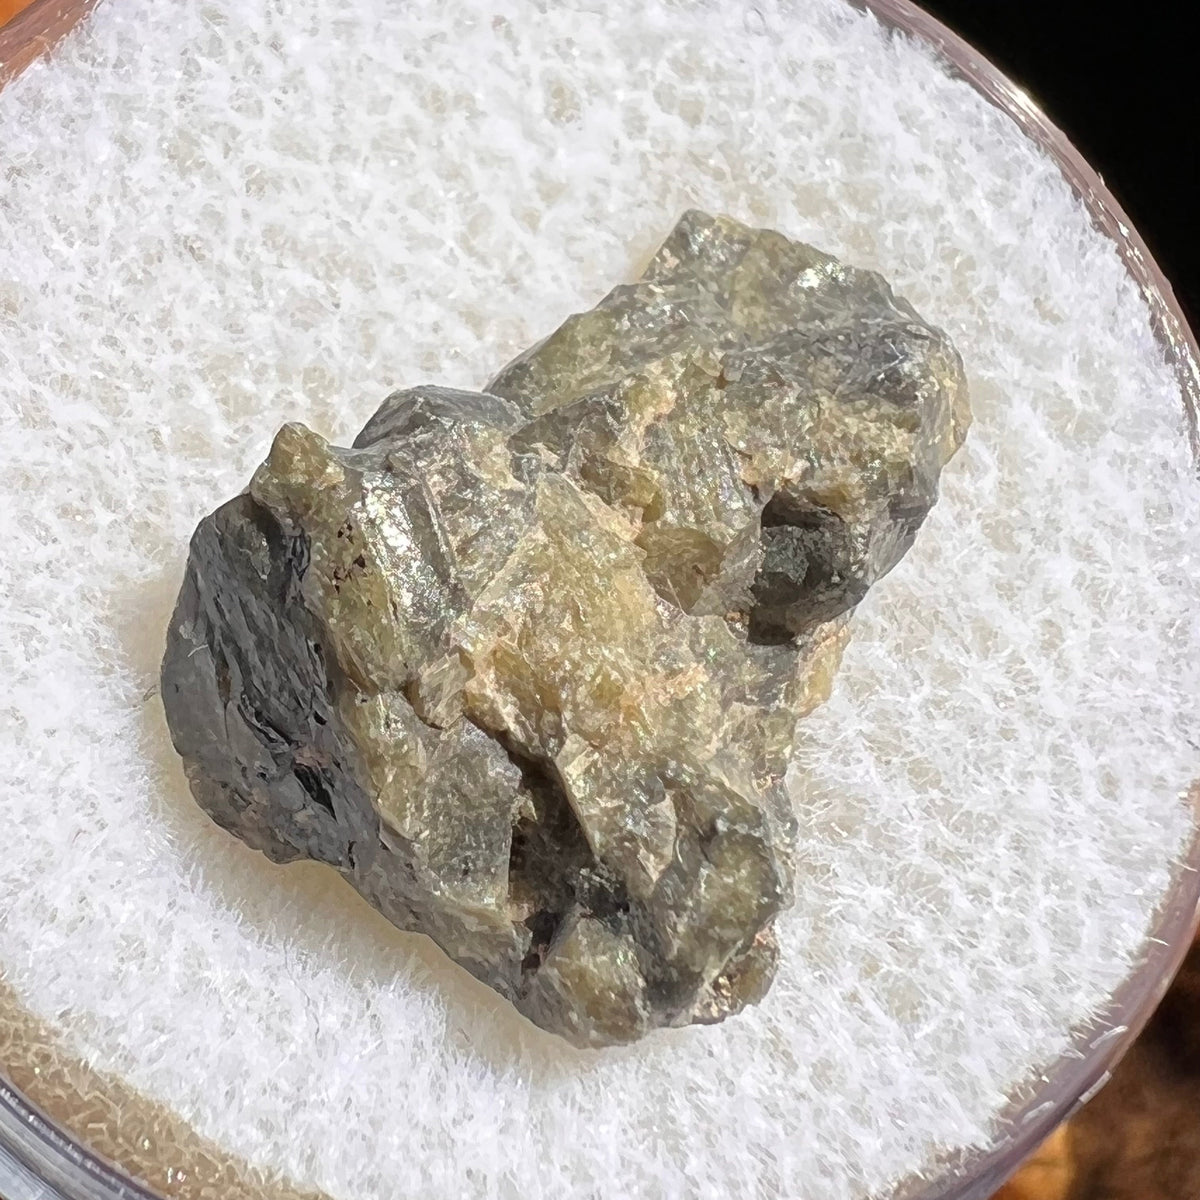 Tatahouine Meteorite 1.6 grams #69-Moldavite Life